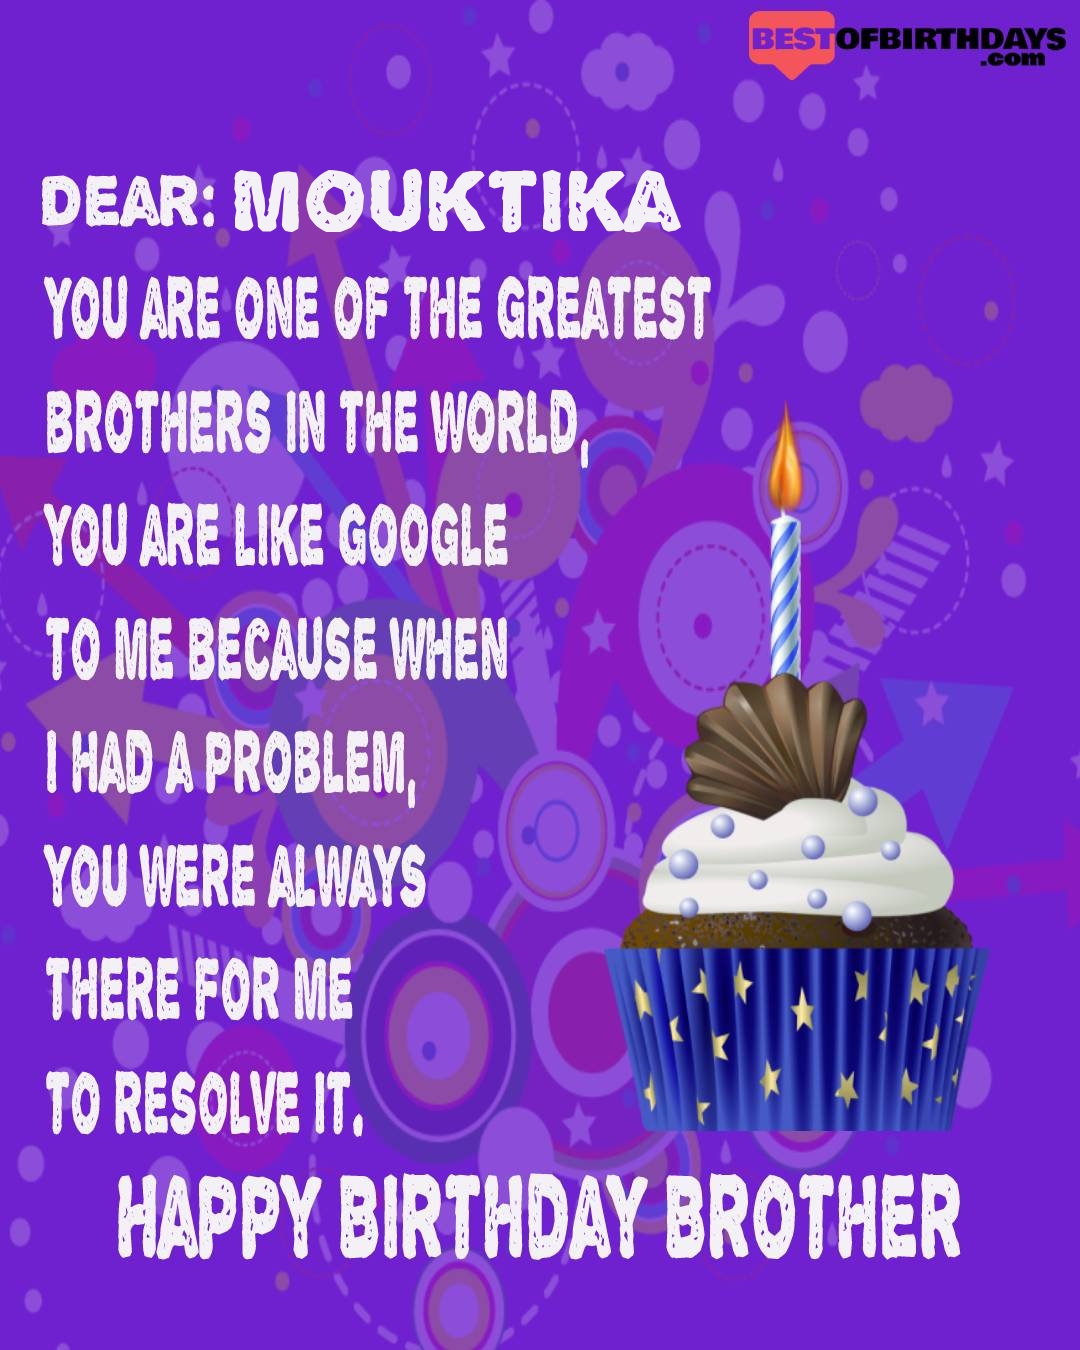 Happy birthday mouktika bhai brother bro